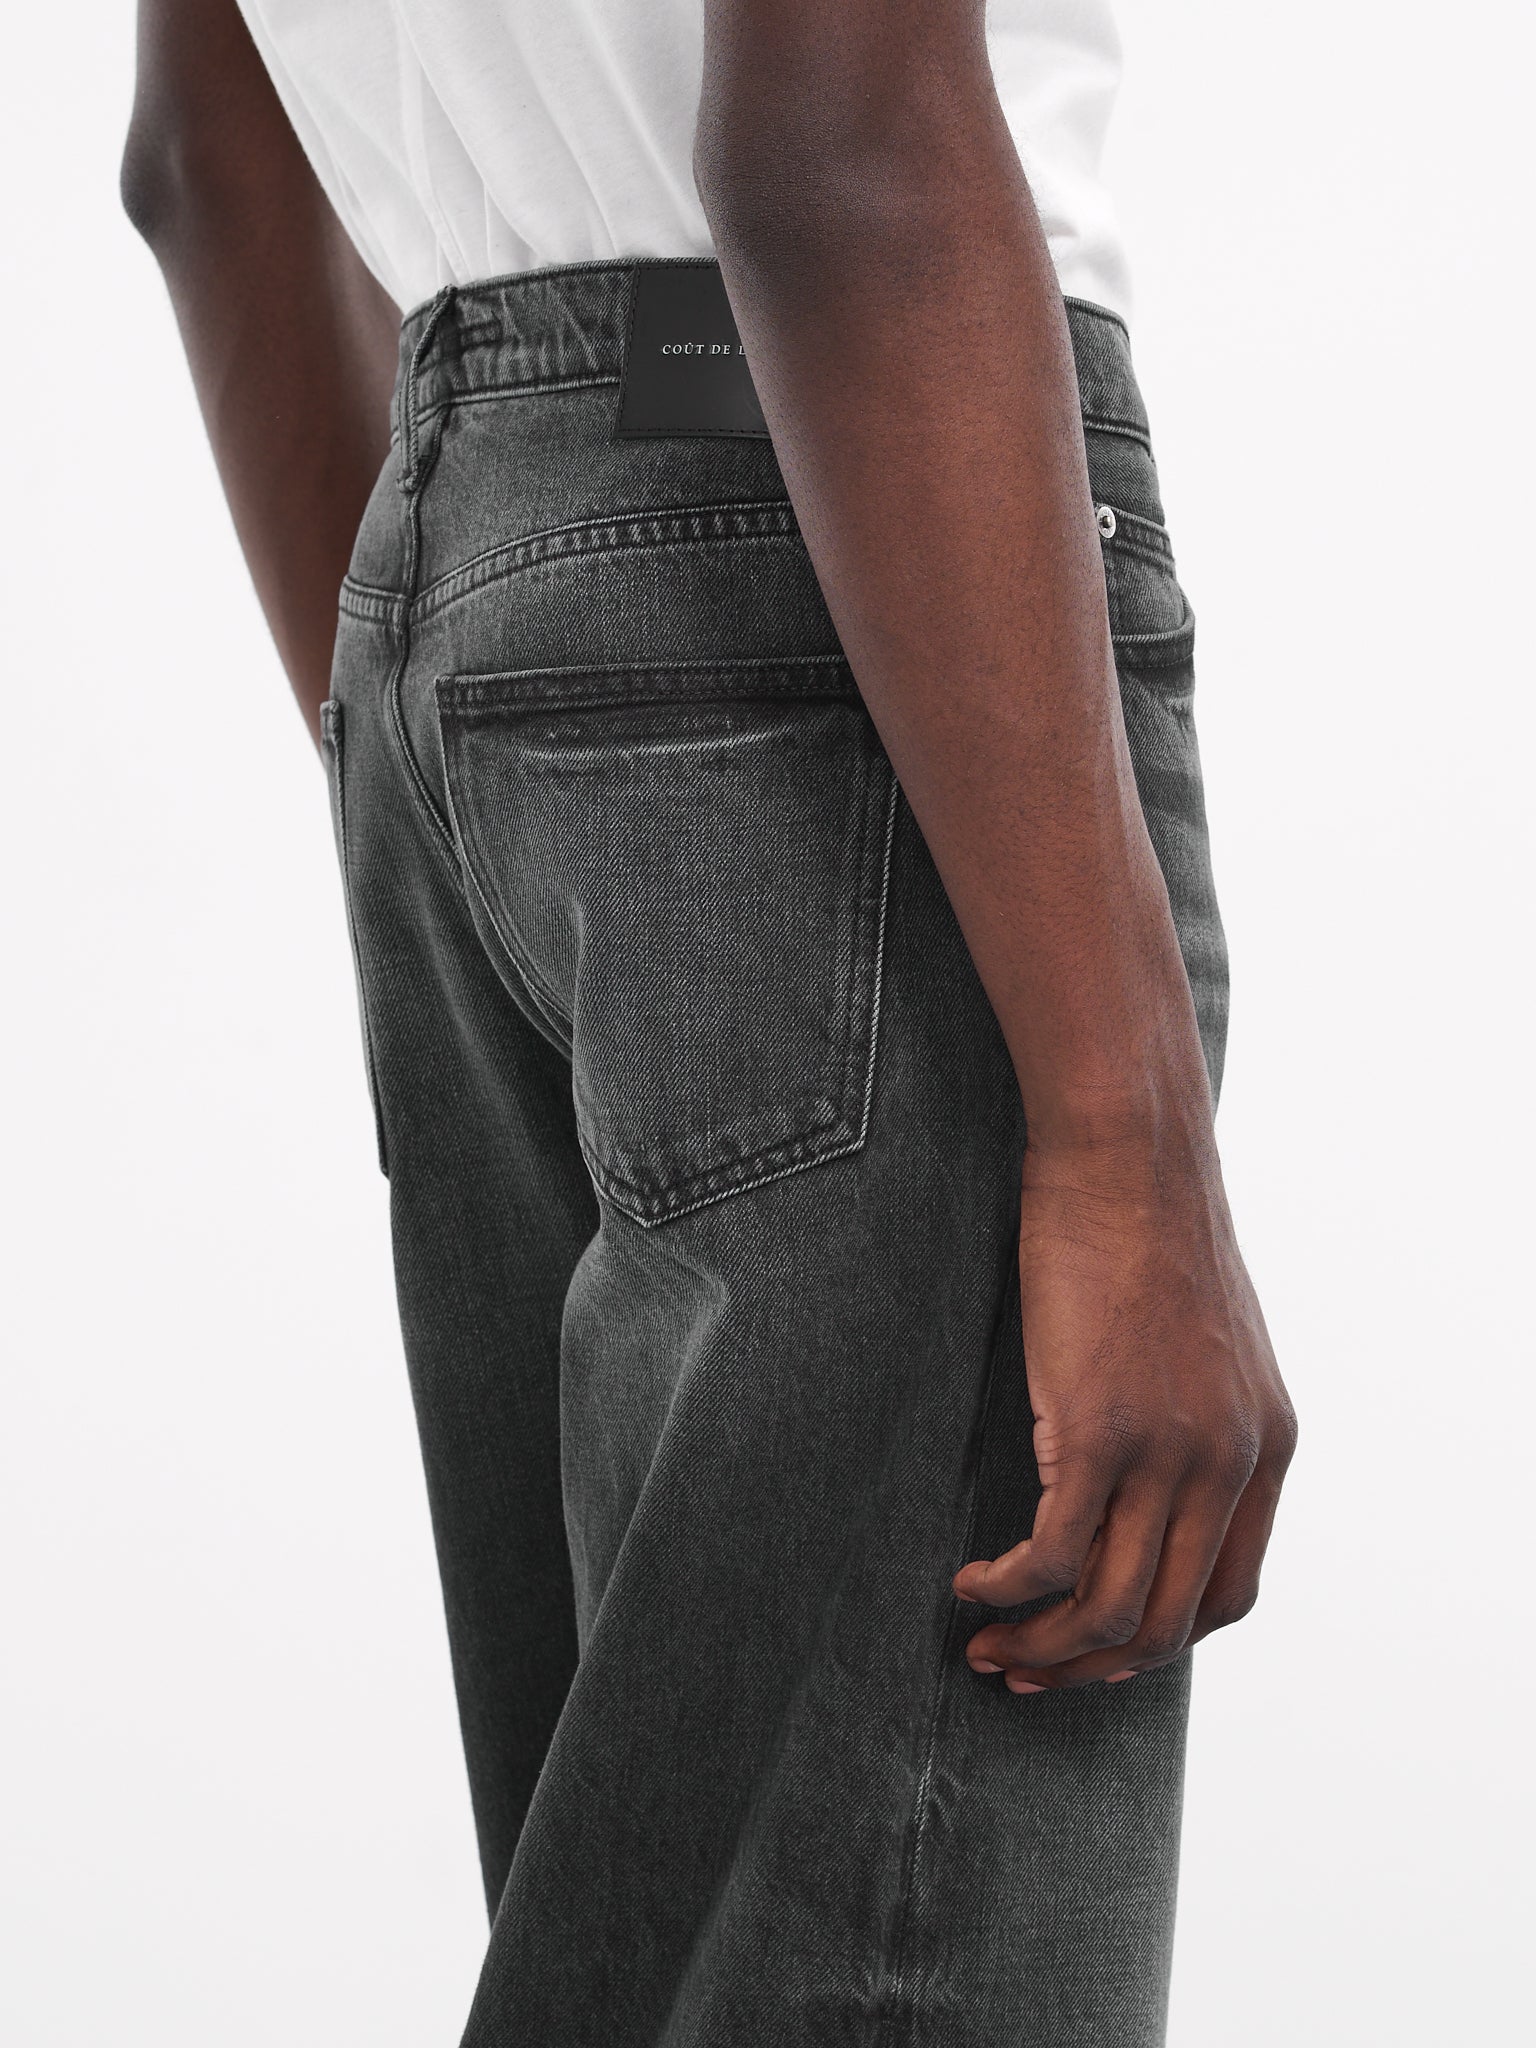 Faded Denim Black Jeans For Men Waist Size: 28 at Best Price in New Delhi |  Kb Enterprises